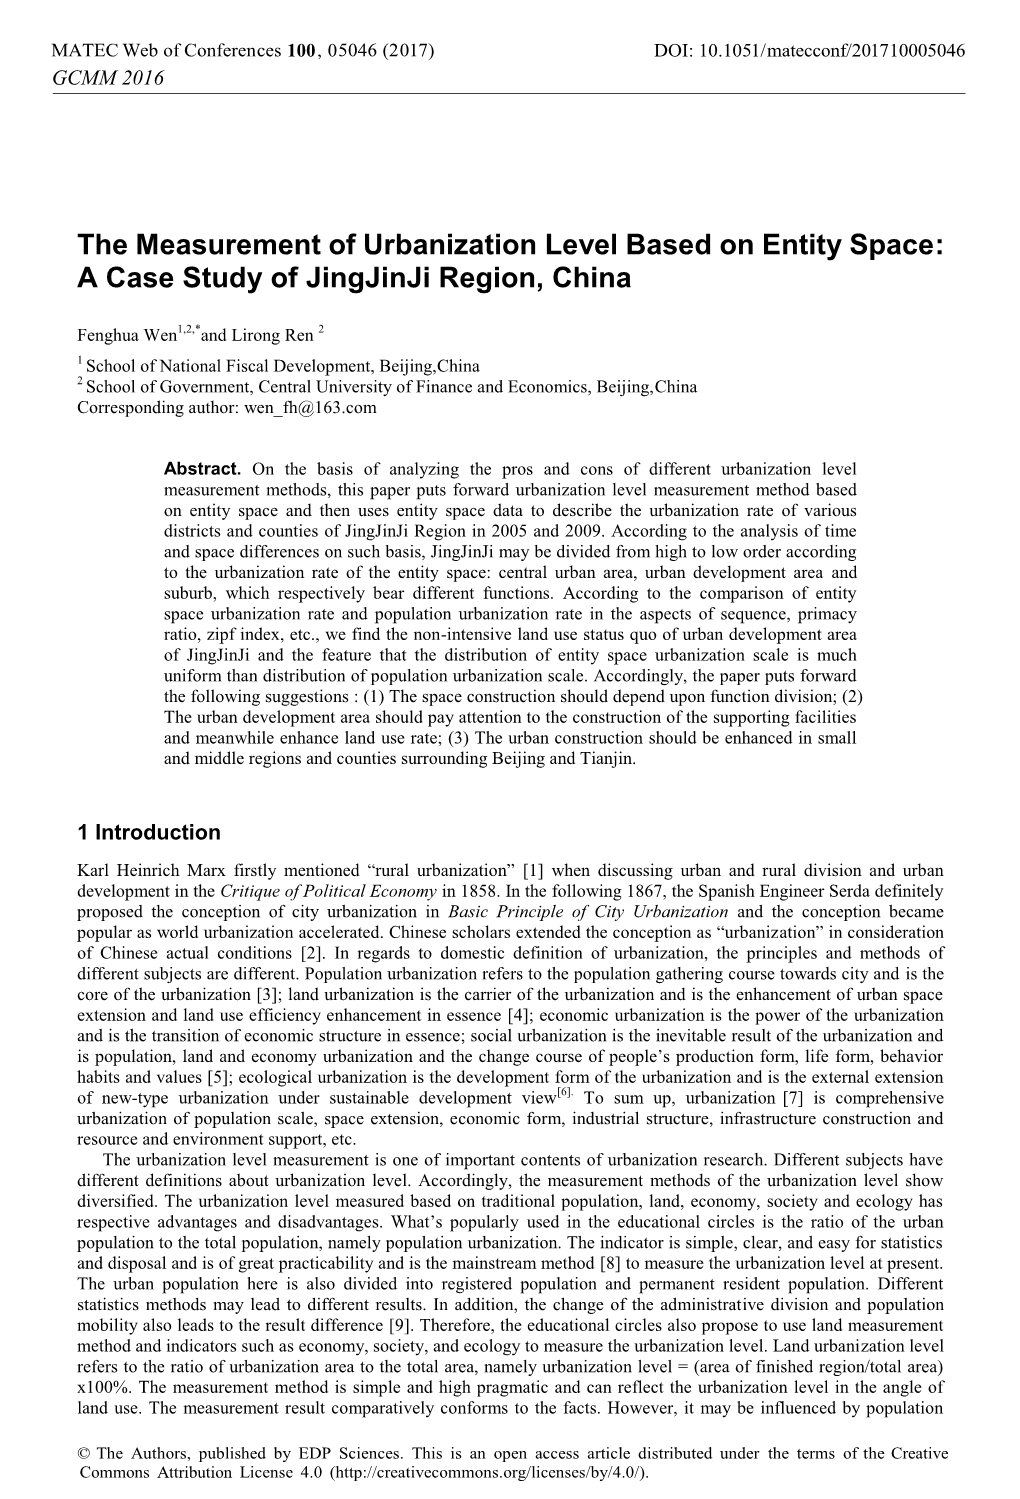 The Measurement of Urbanization Level Based on Entity Space: a Case Study of Jingjinji Region, China